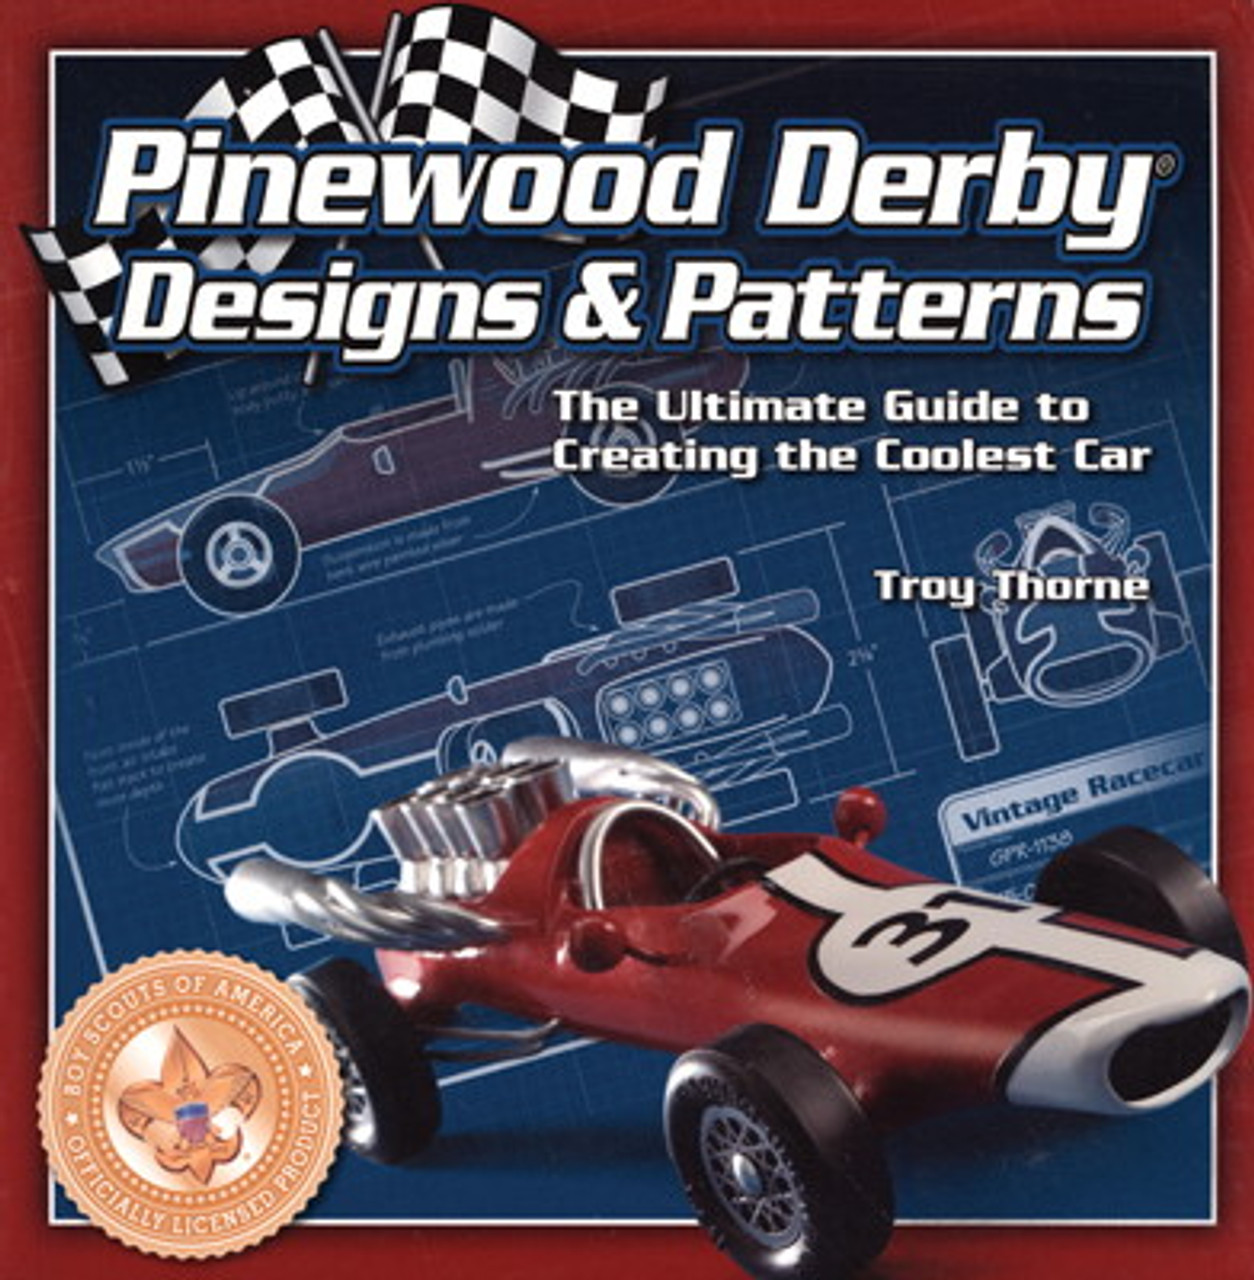 Pinewood Derby Car Kit Comparisons 